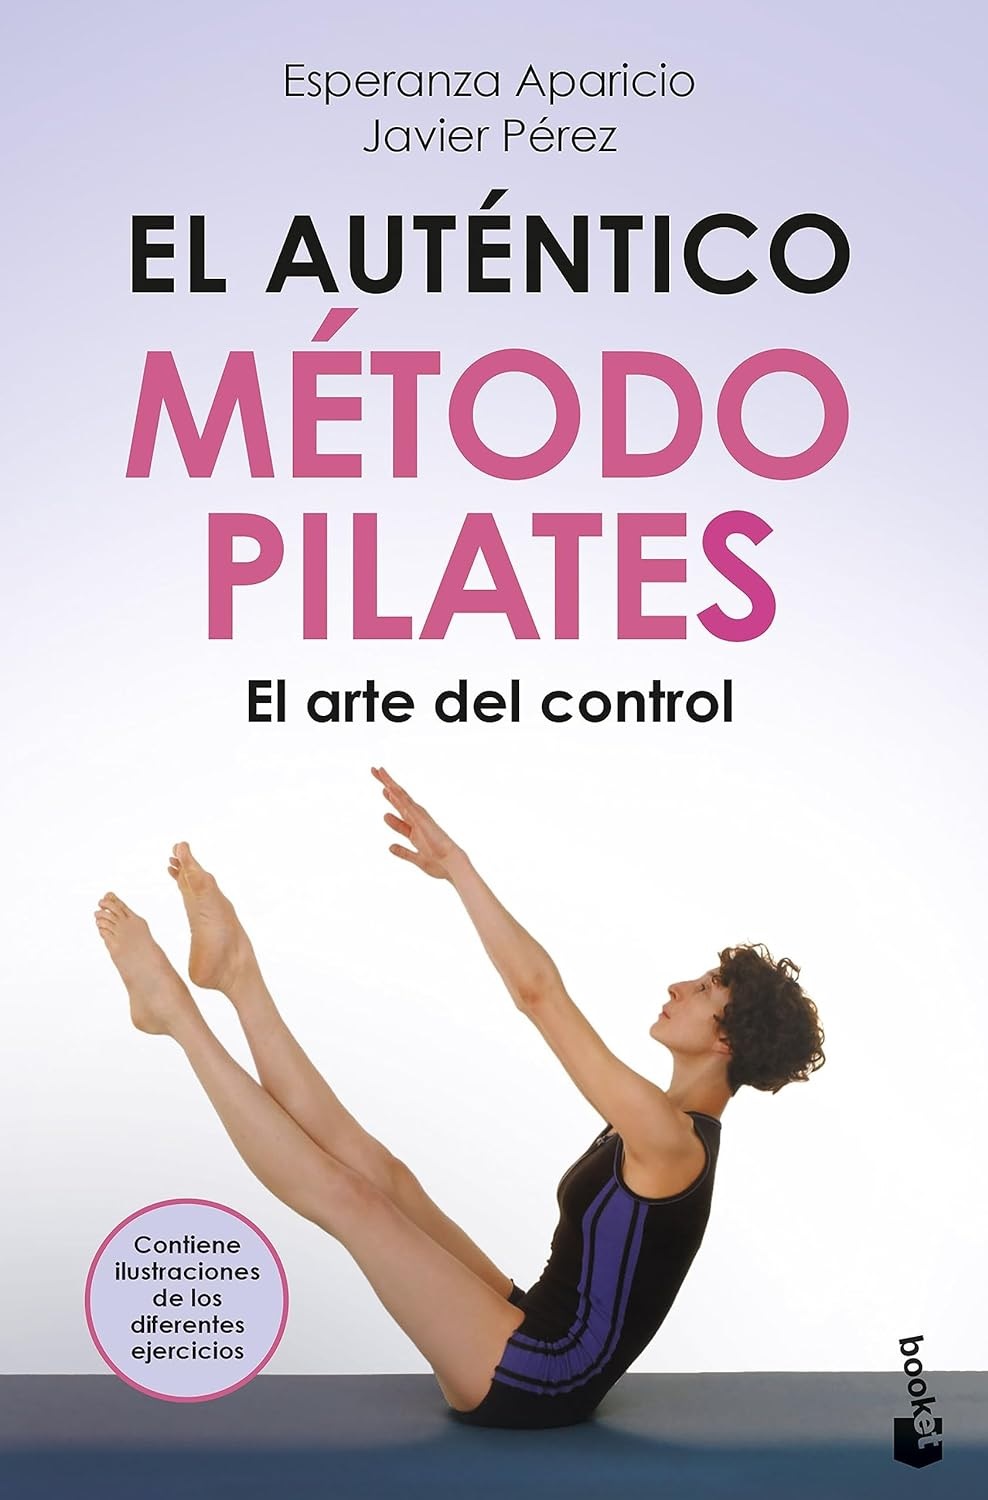 Enciclopedia de ejercicios de Pilates